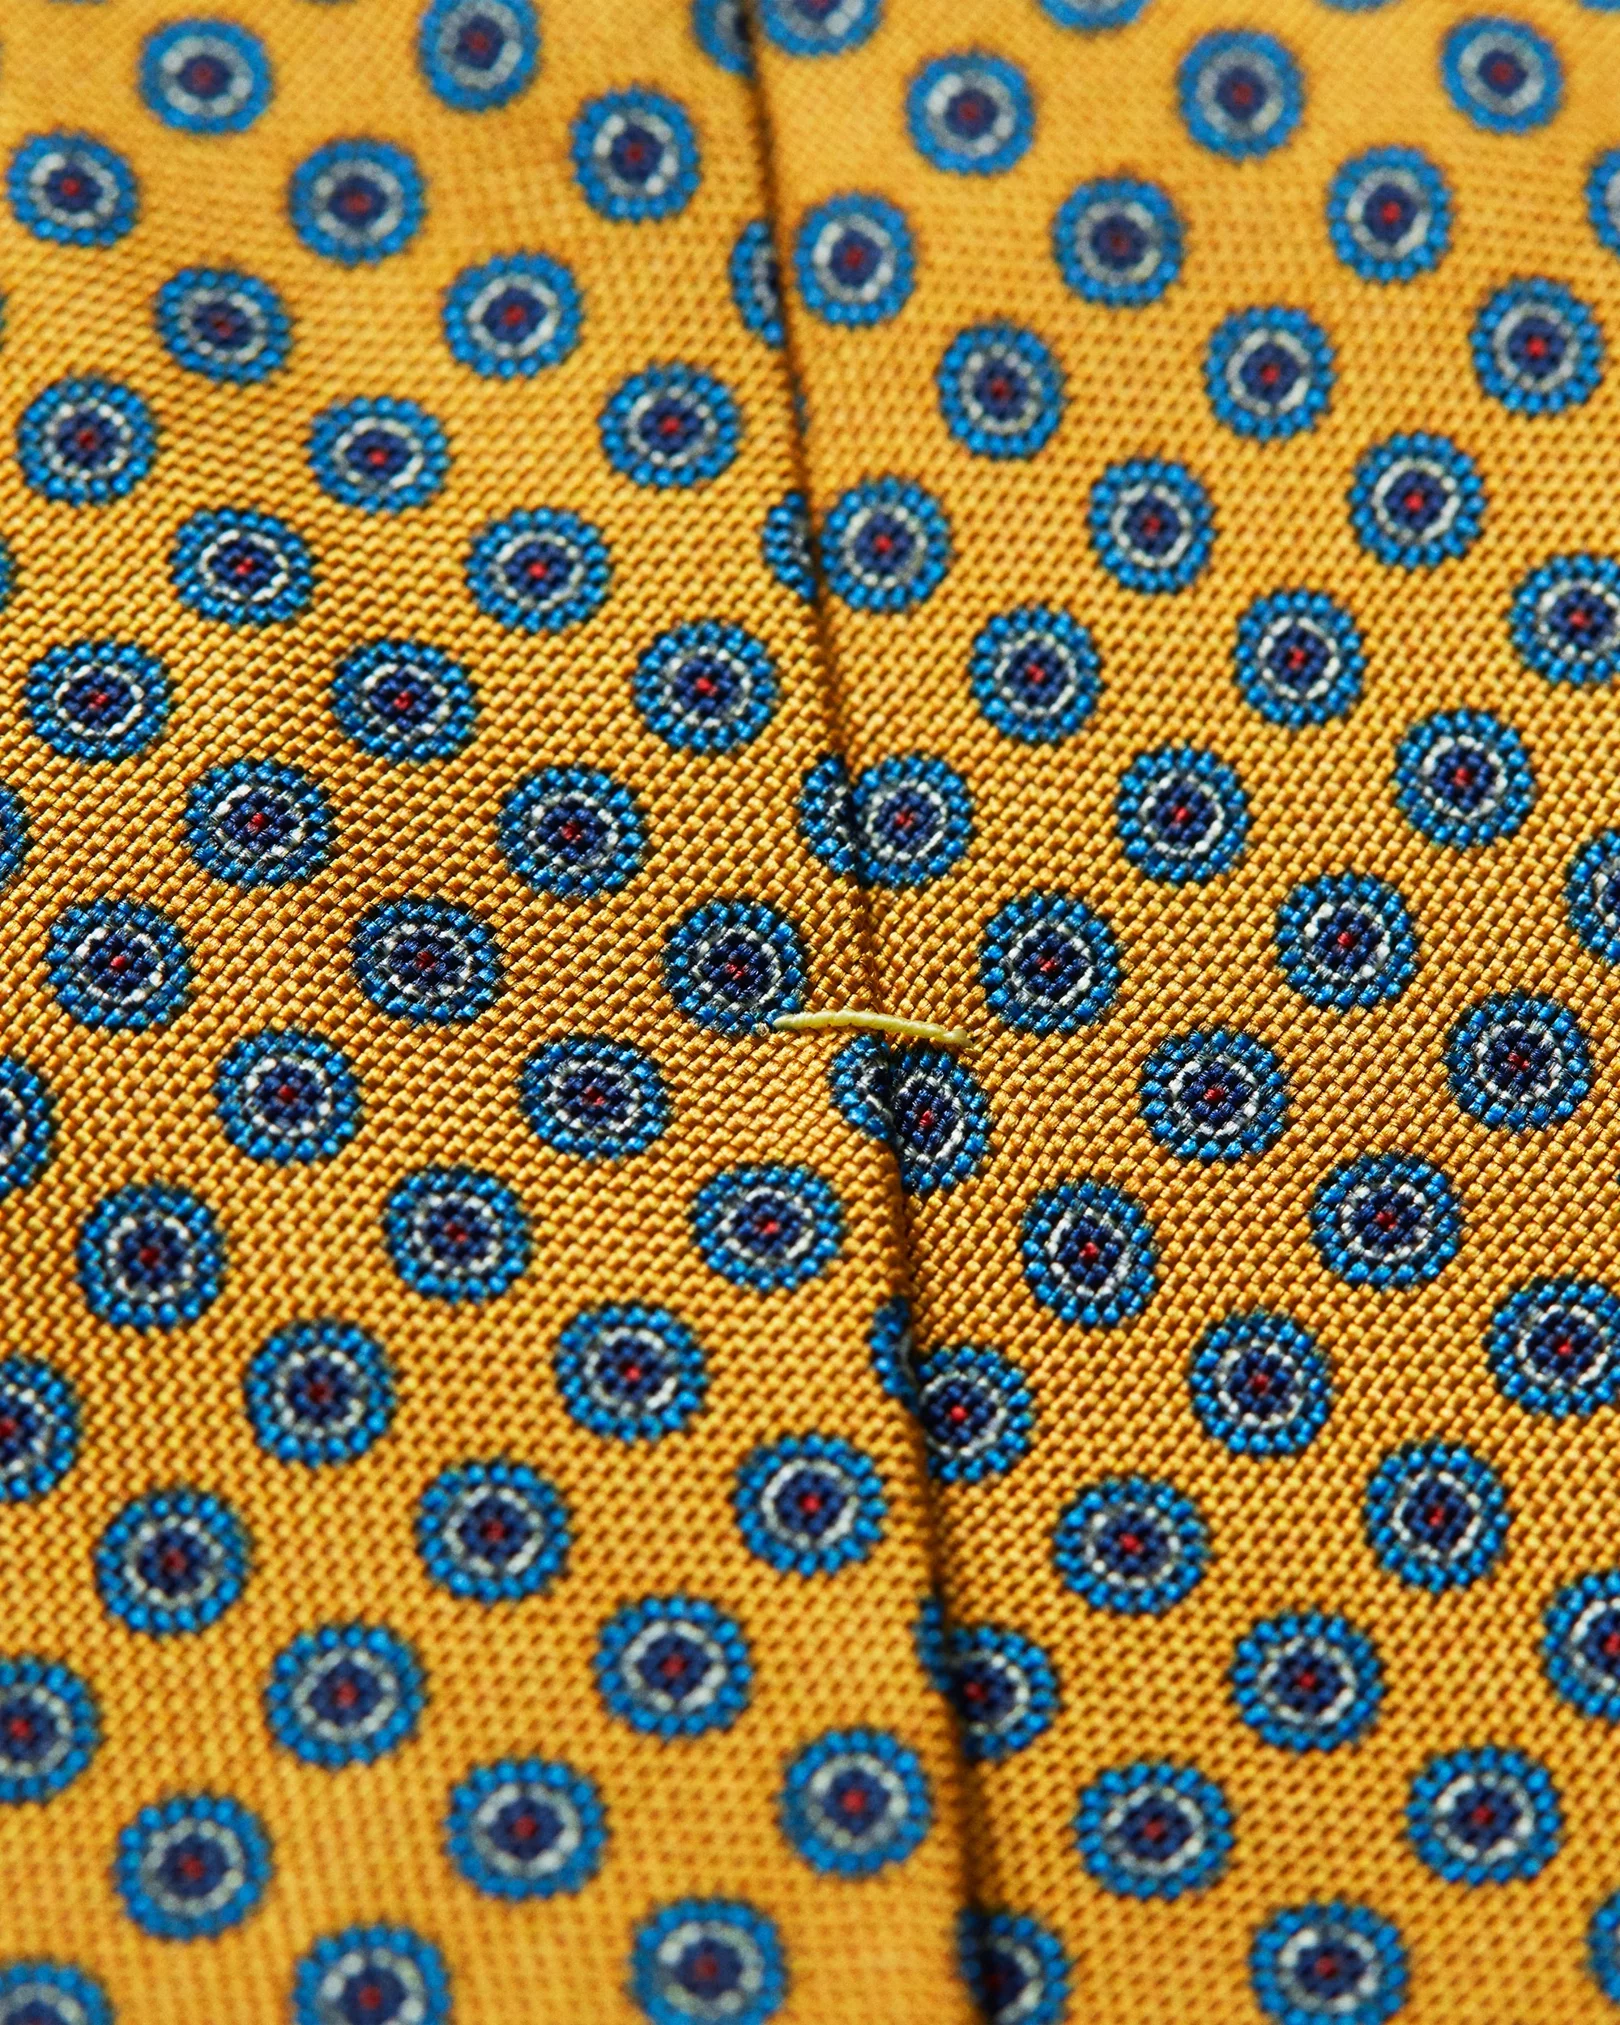 Eton - orange geometric tie